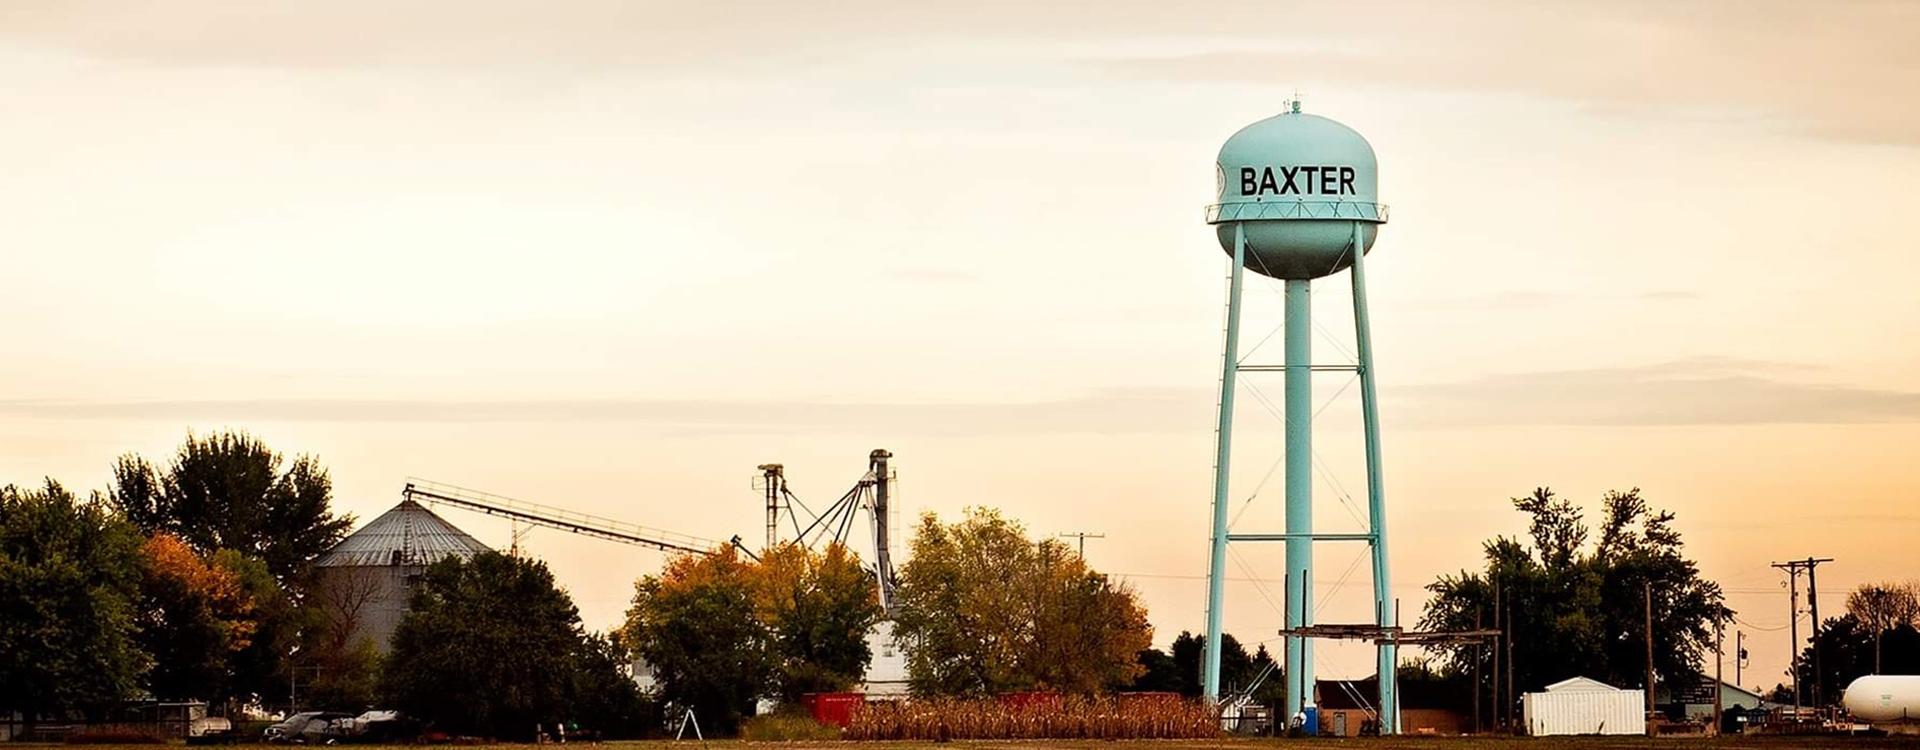 City of Baxter